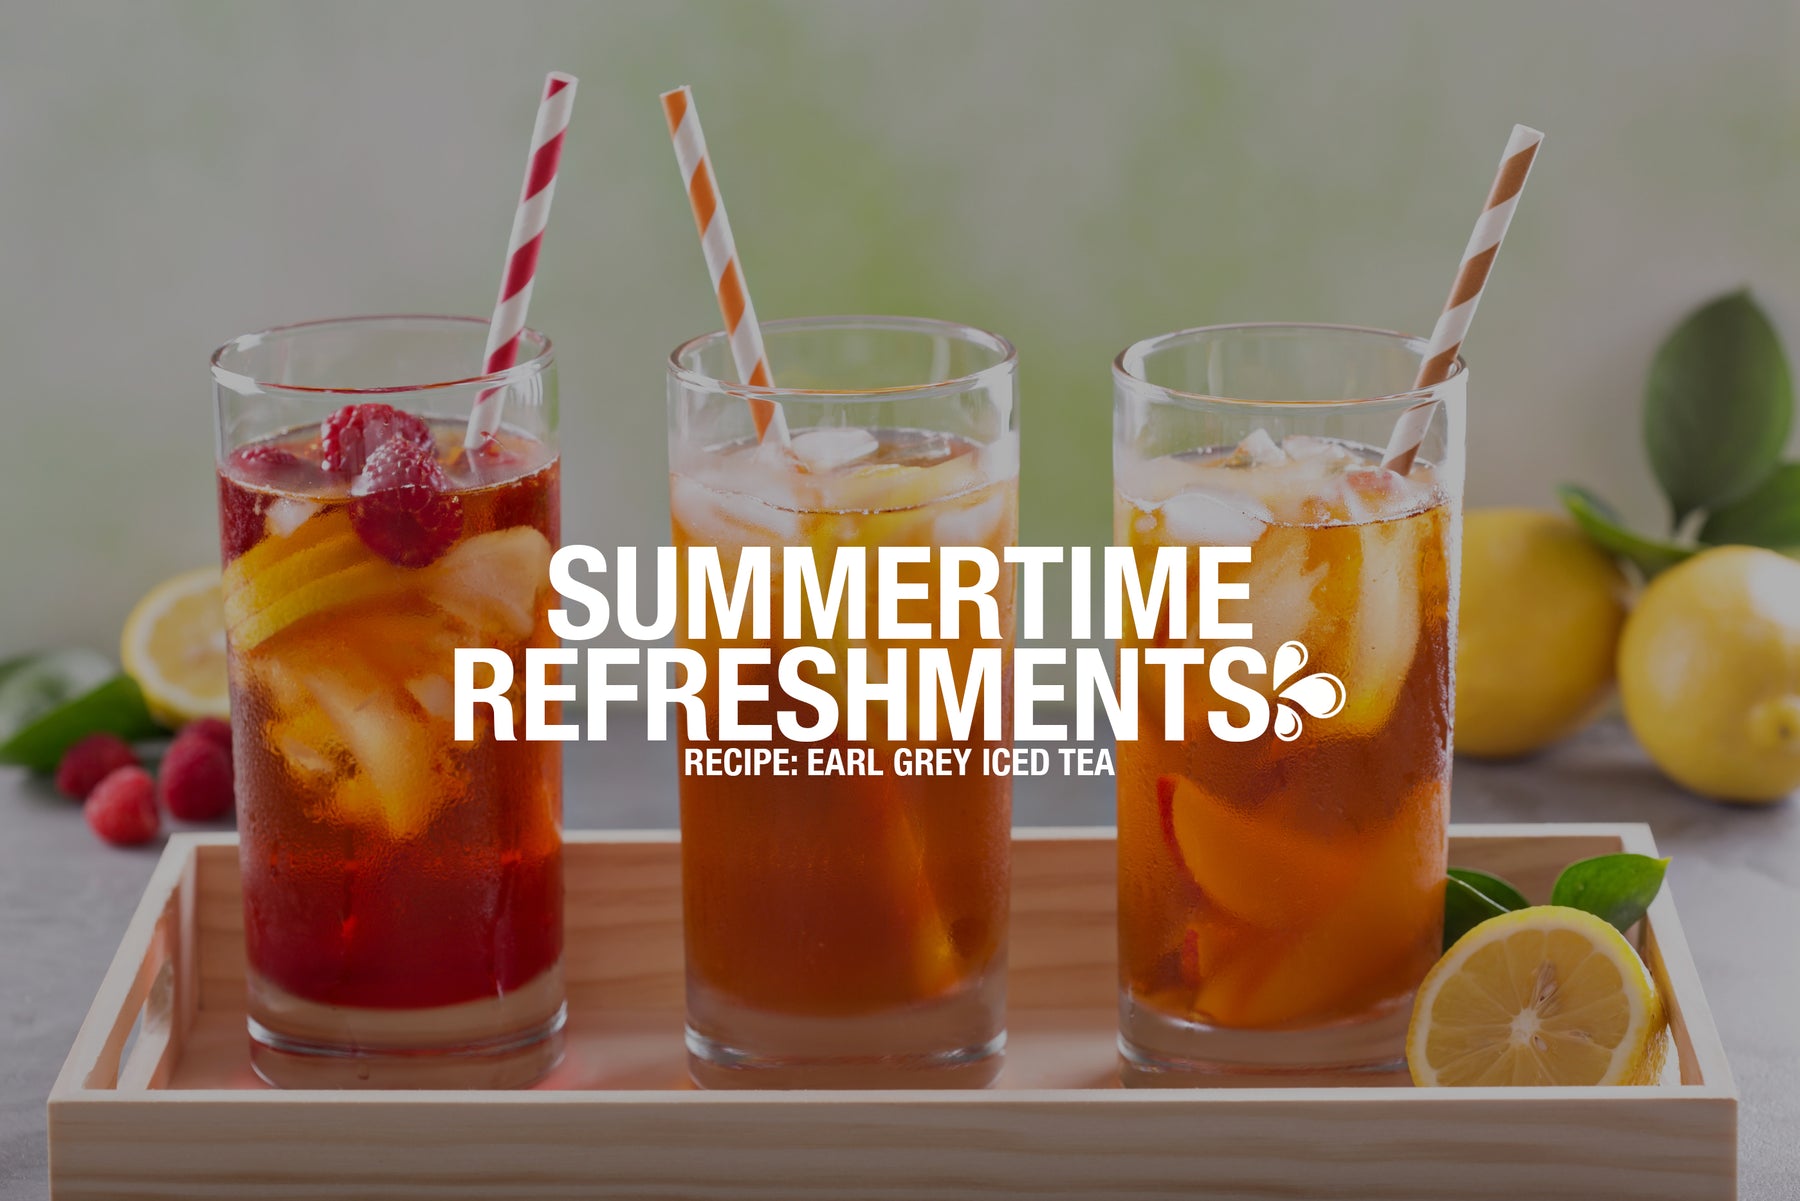 Summertime Refreshments: Earl Grey Iced Tea